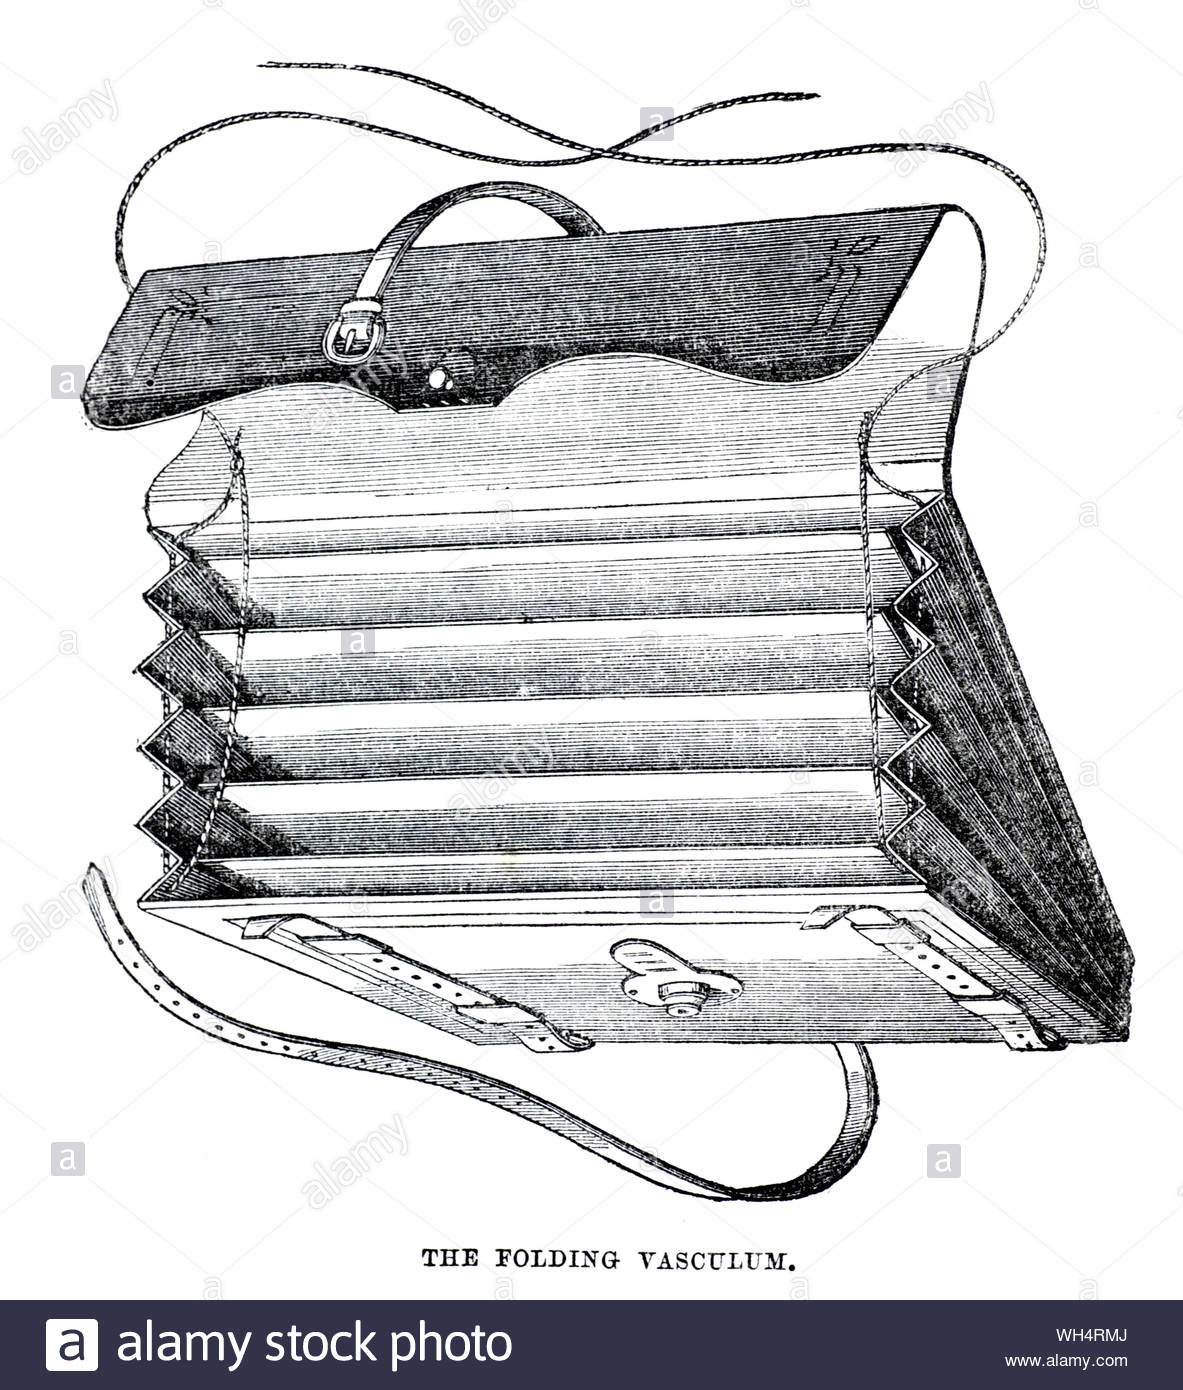 Folding Vasculum, vintage illustration from 1884 Stock Photo